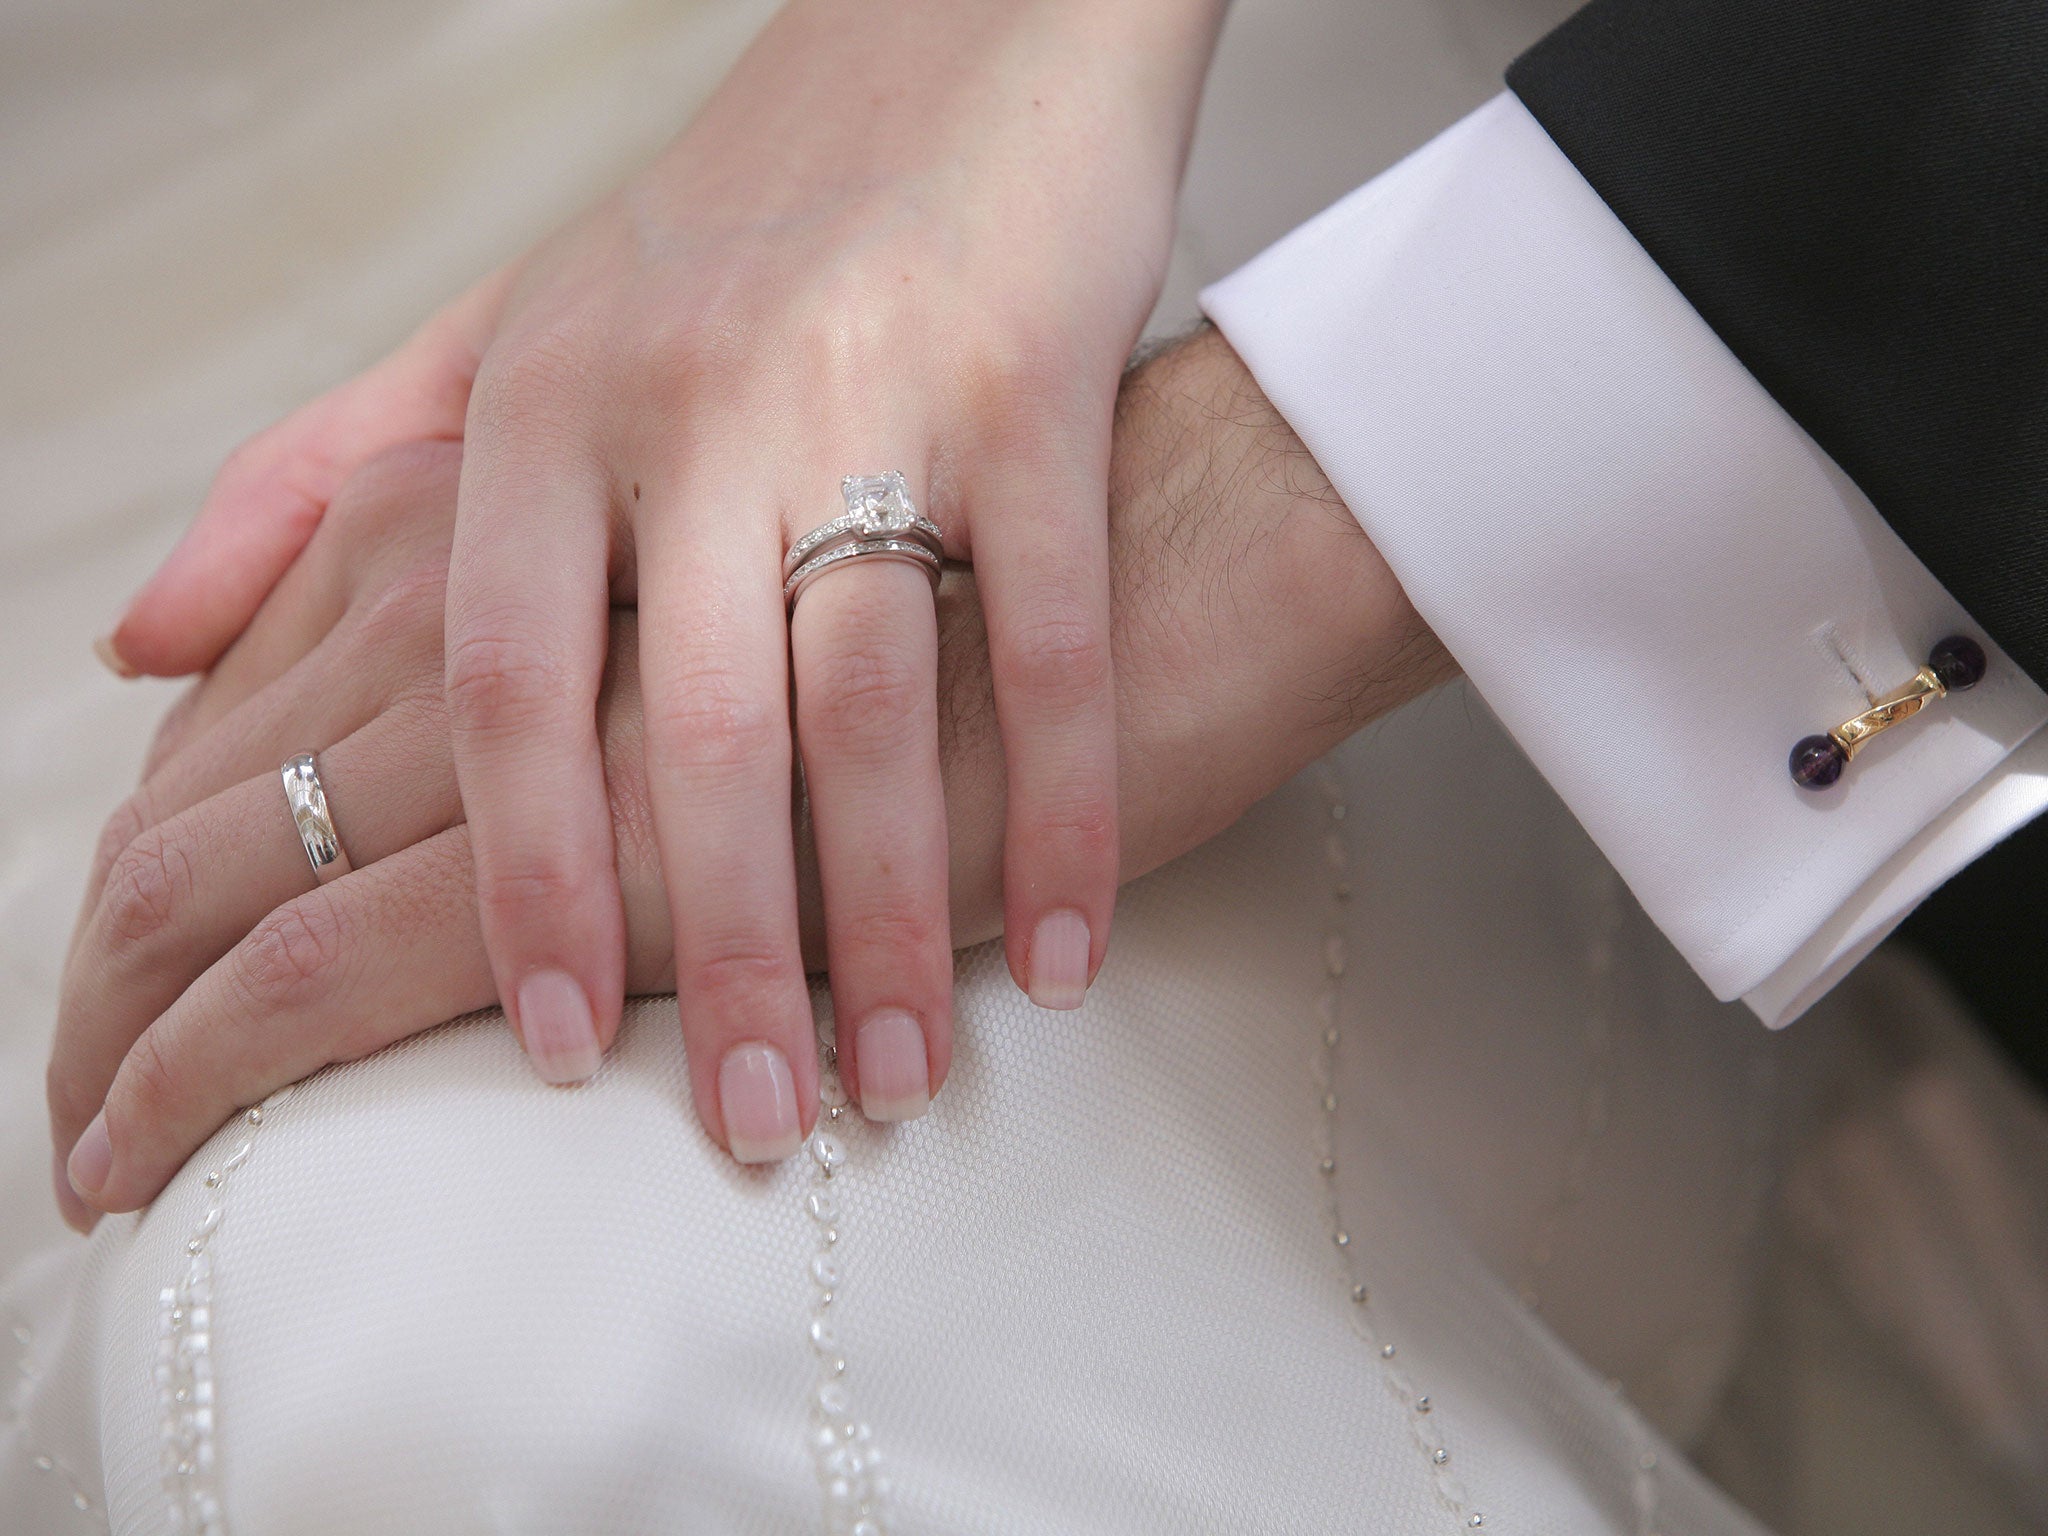 Researchers surveyed 135 newlywed couples